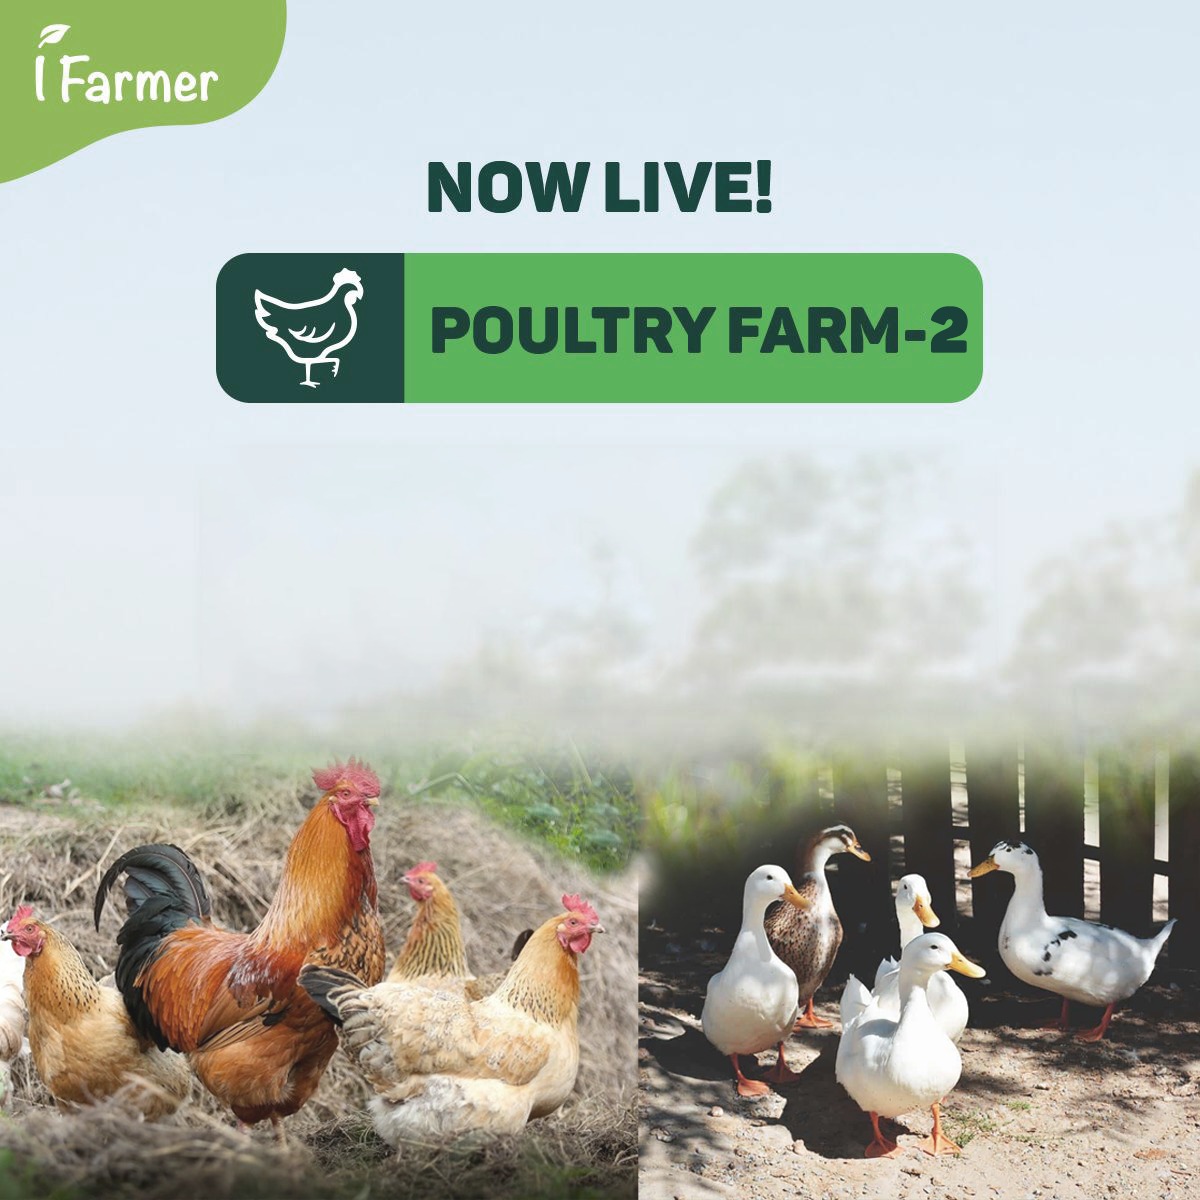 Poultry Farm - 2